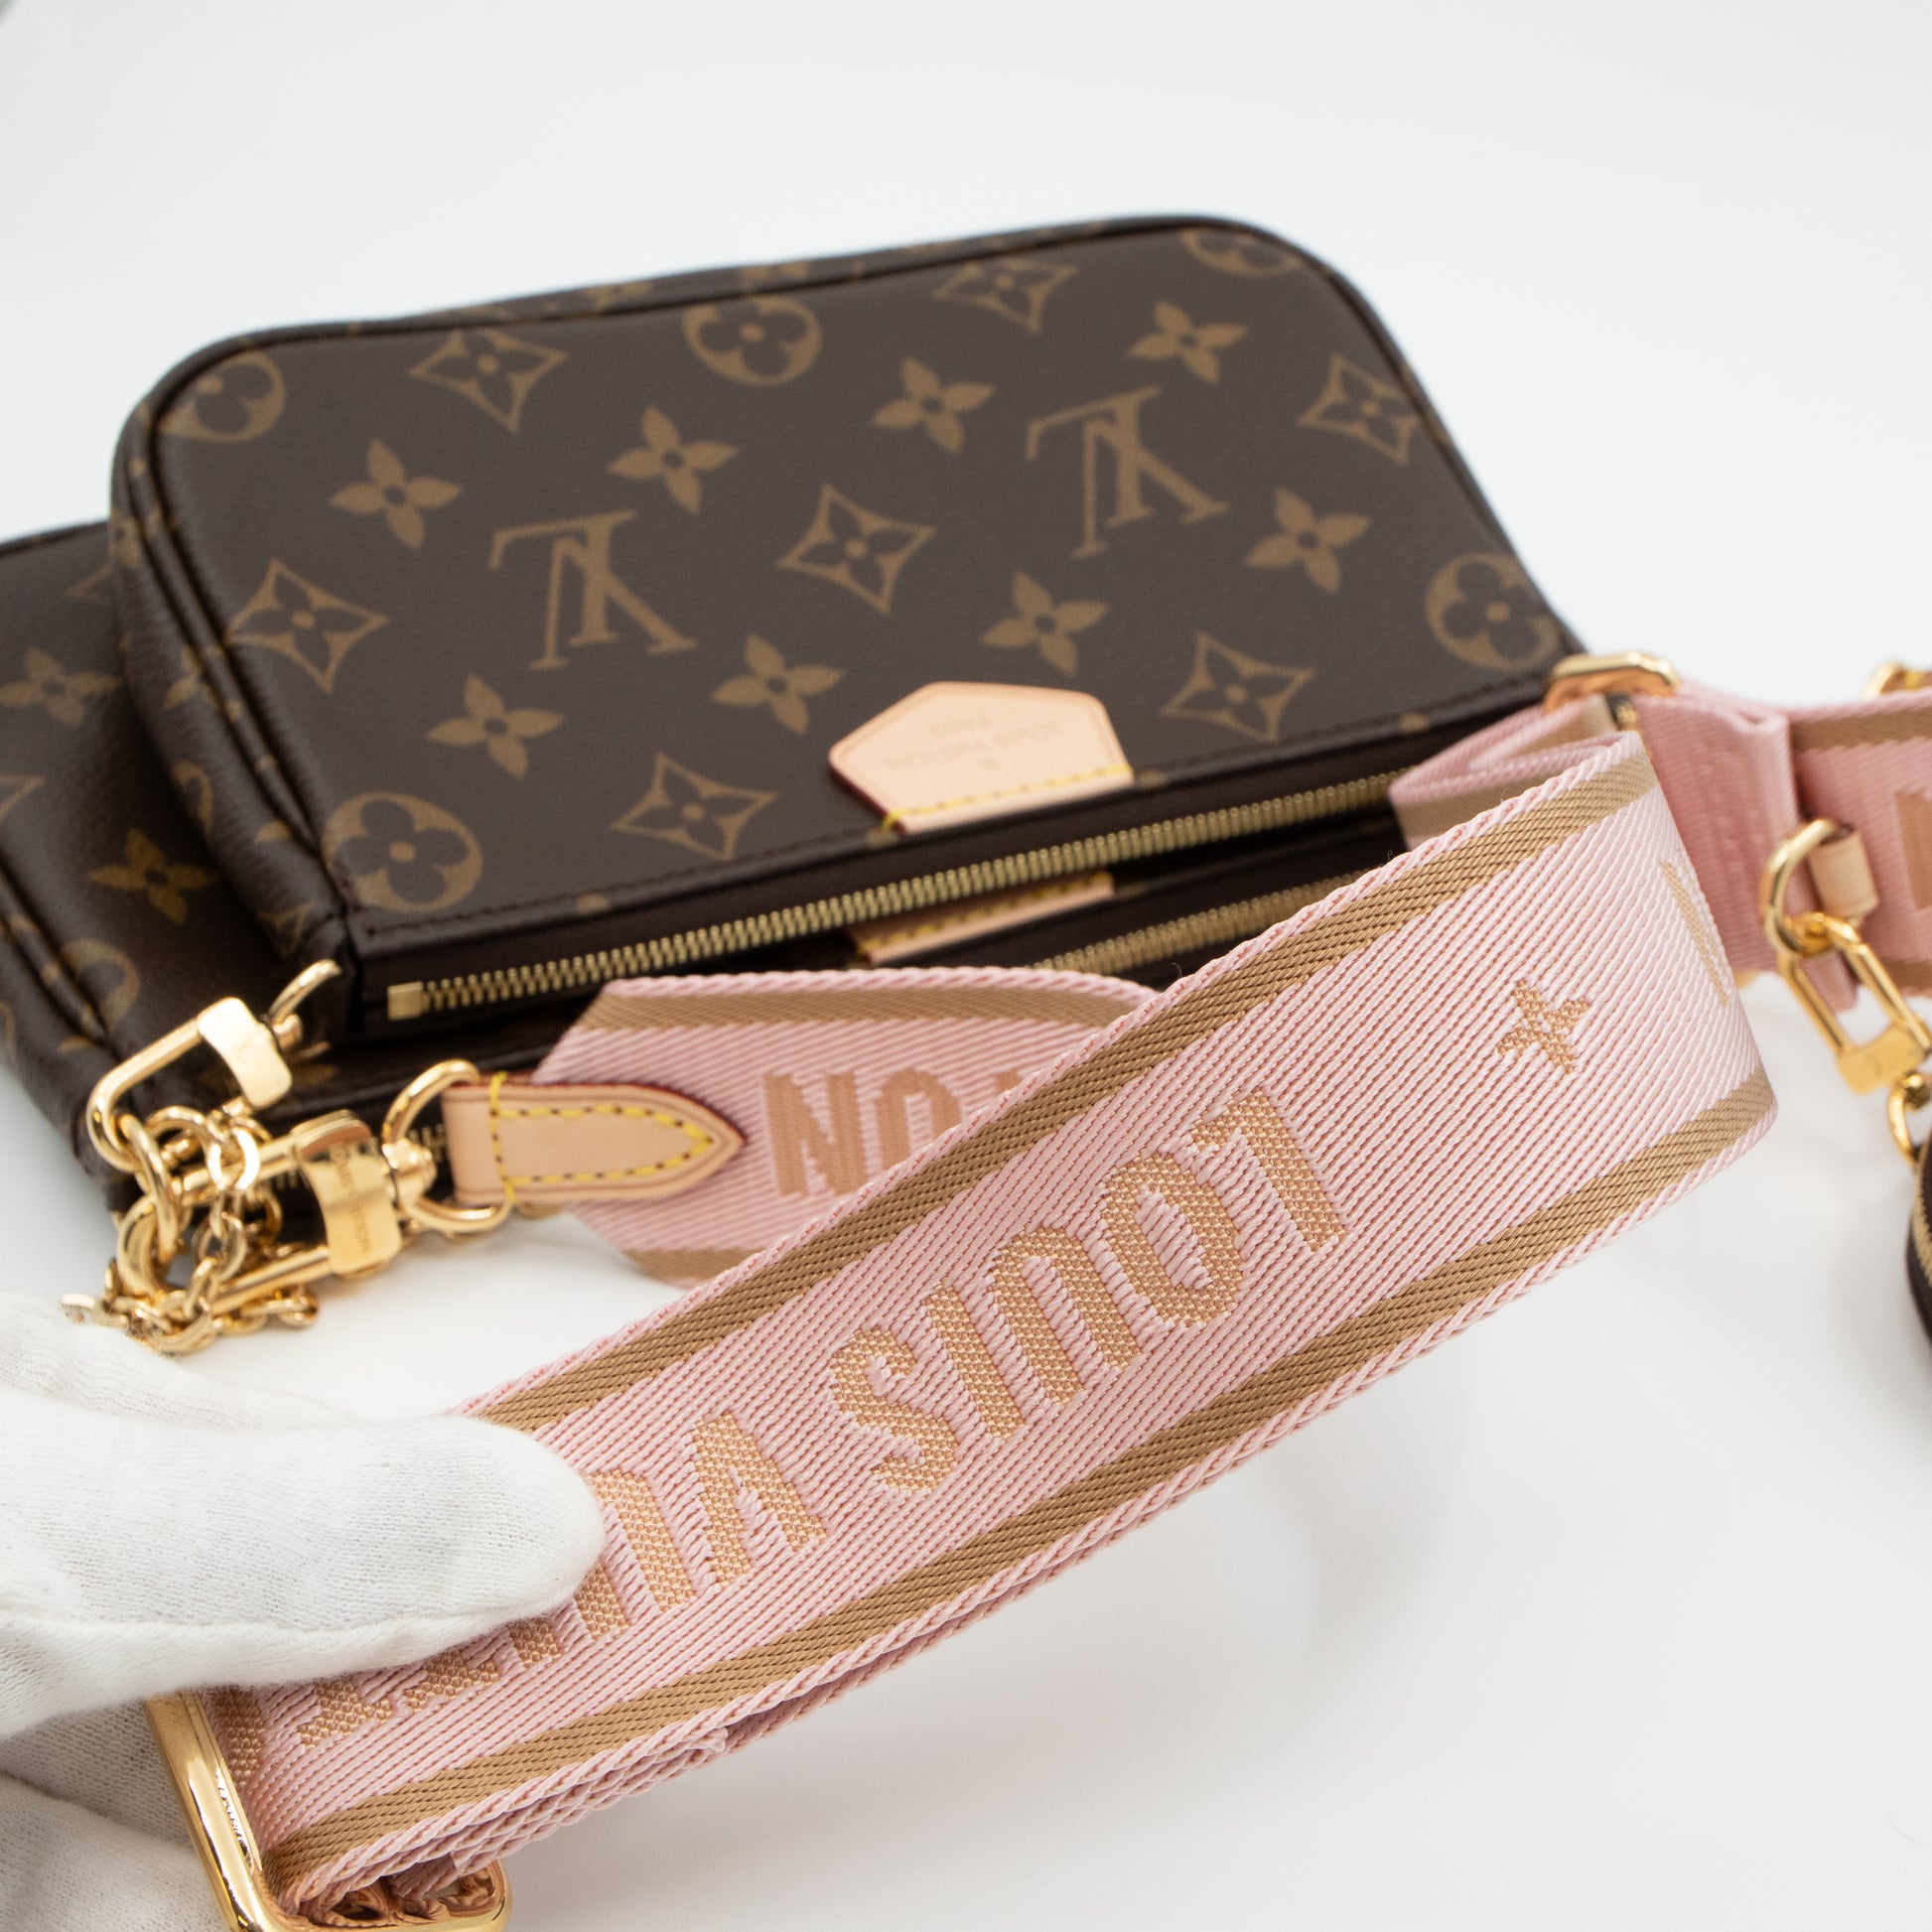 Louis Vuitton - Authenticated Multi Pochette Accessoires Handbag - Cloth Brown for Women, Never Worn